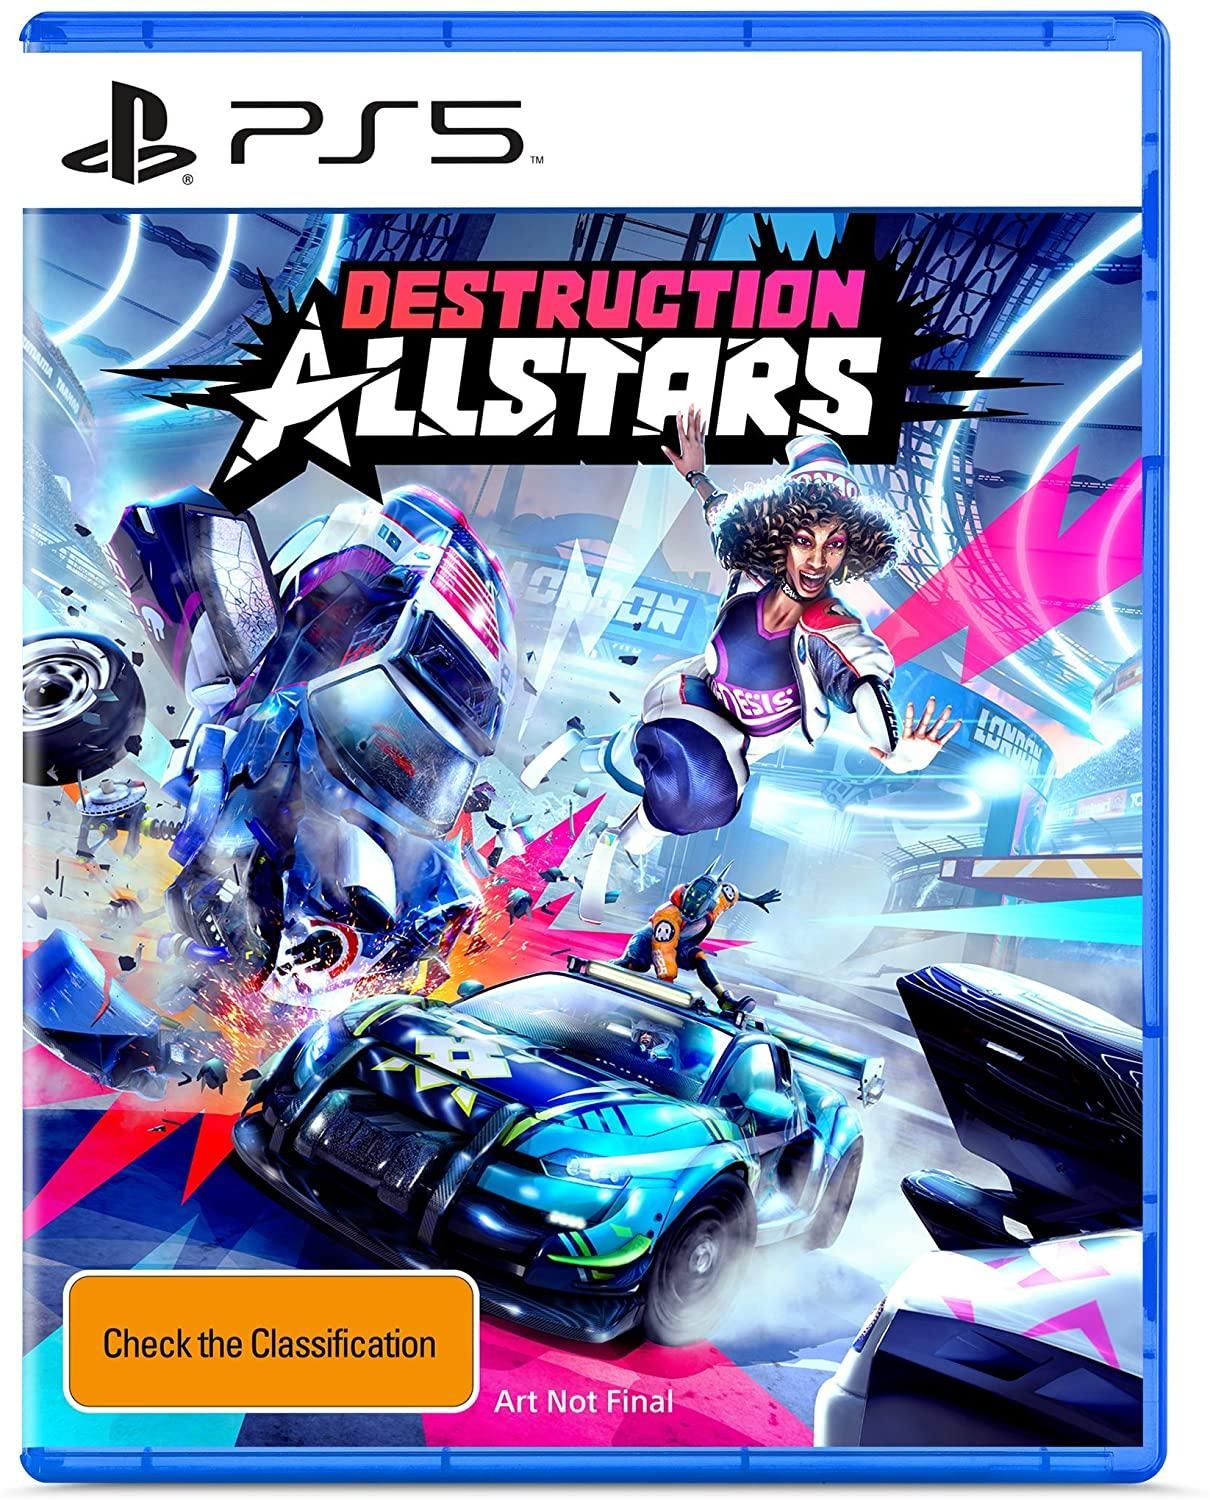 Destruction Allstars PS5 box art leaked by amazon